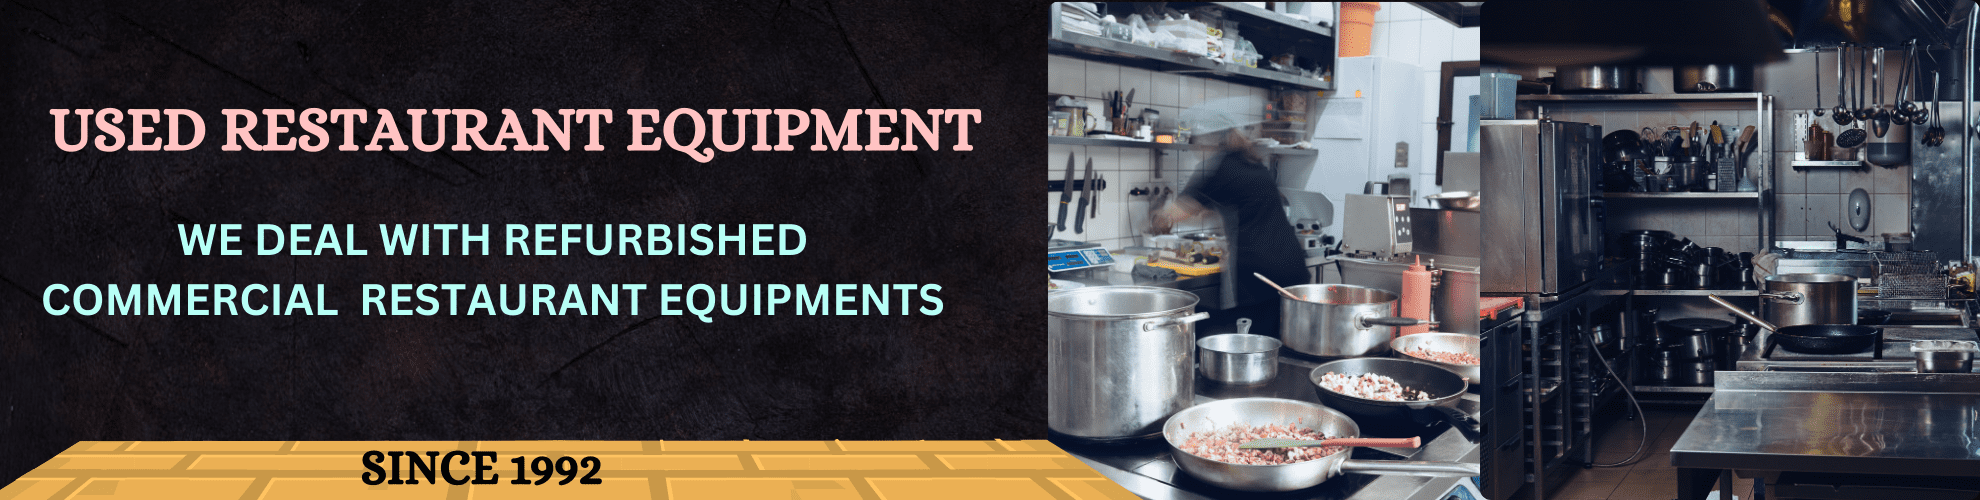 usedrestaurantequipment